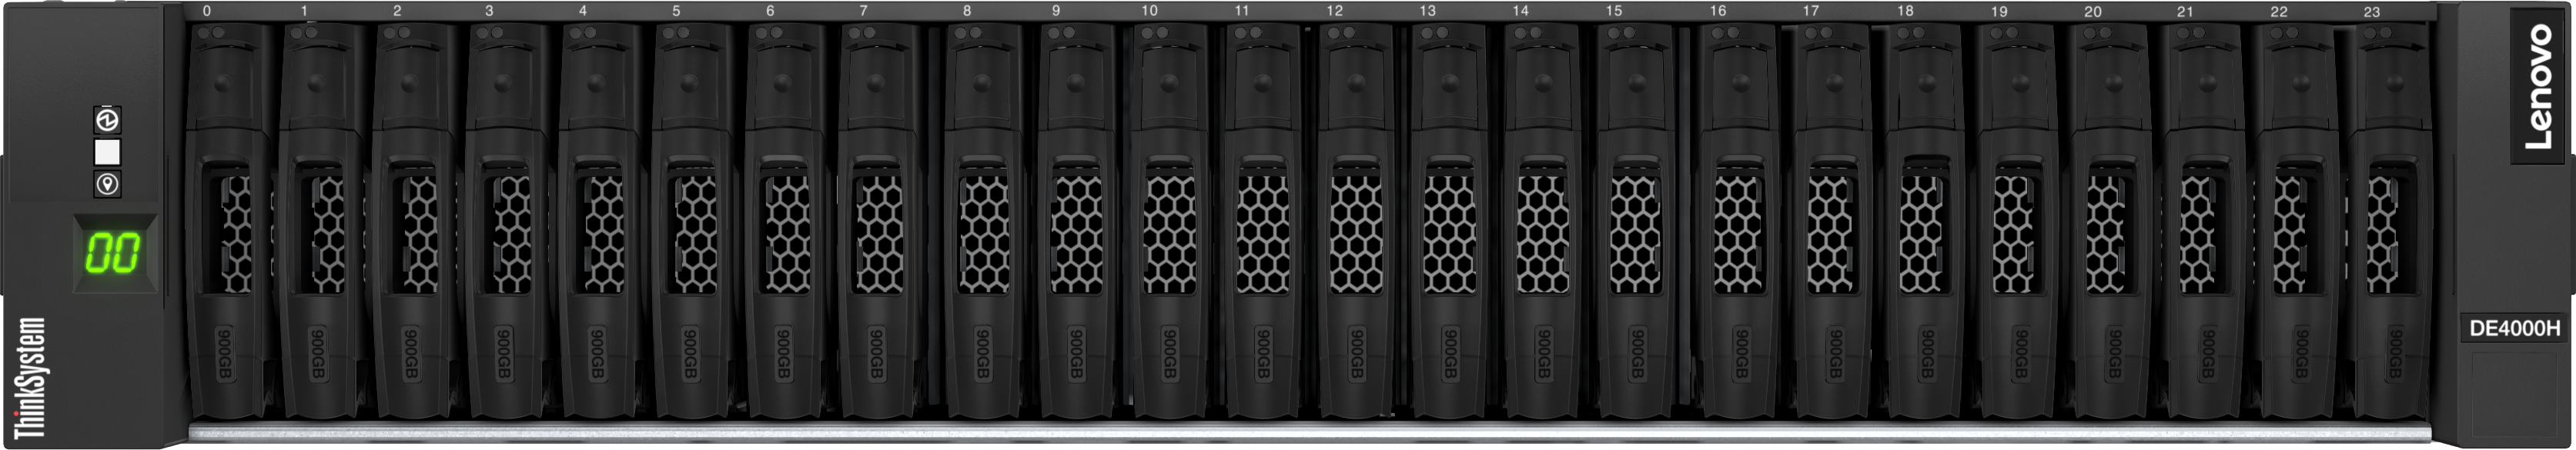 Lenovo ThinkSystem DEシリーズHot Swap Harddrive、4TB、3.5 ""、LFF、7200RPM、SAS 